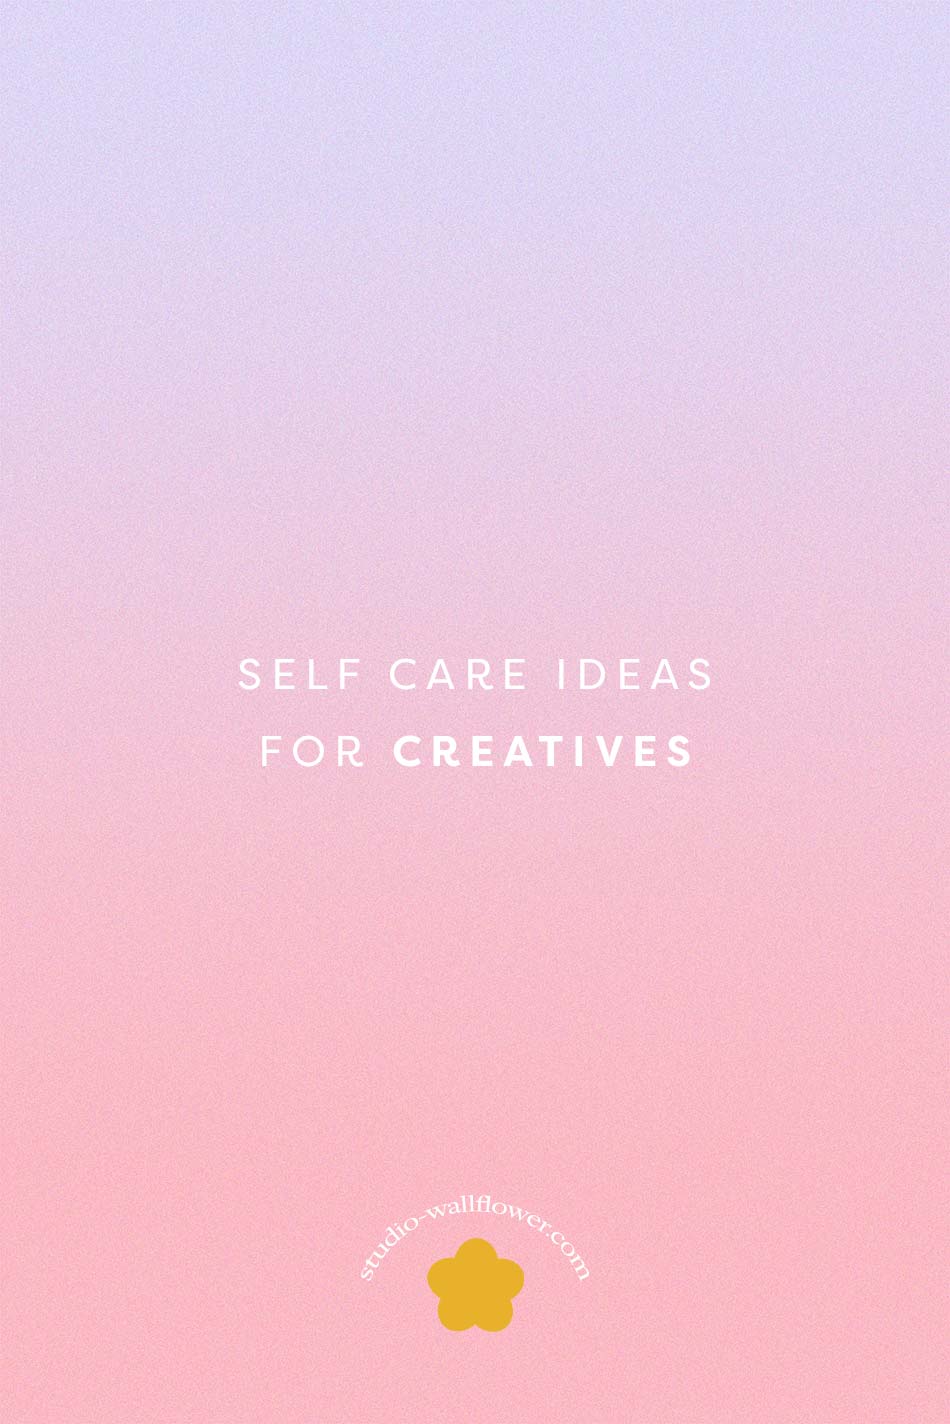 8 self care ideas for creatives via wallflower